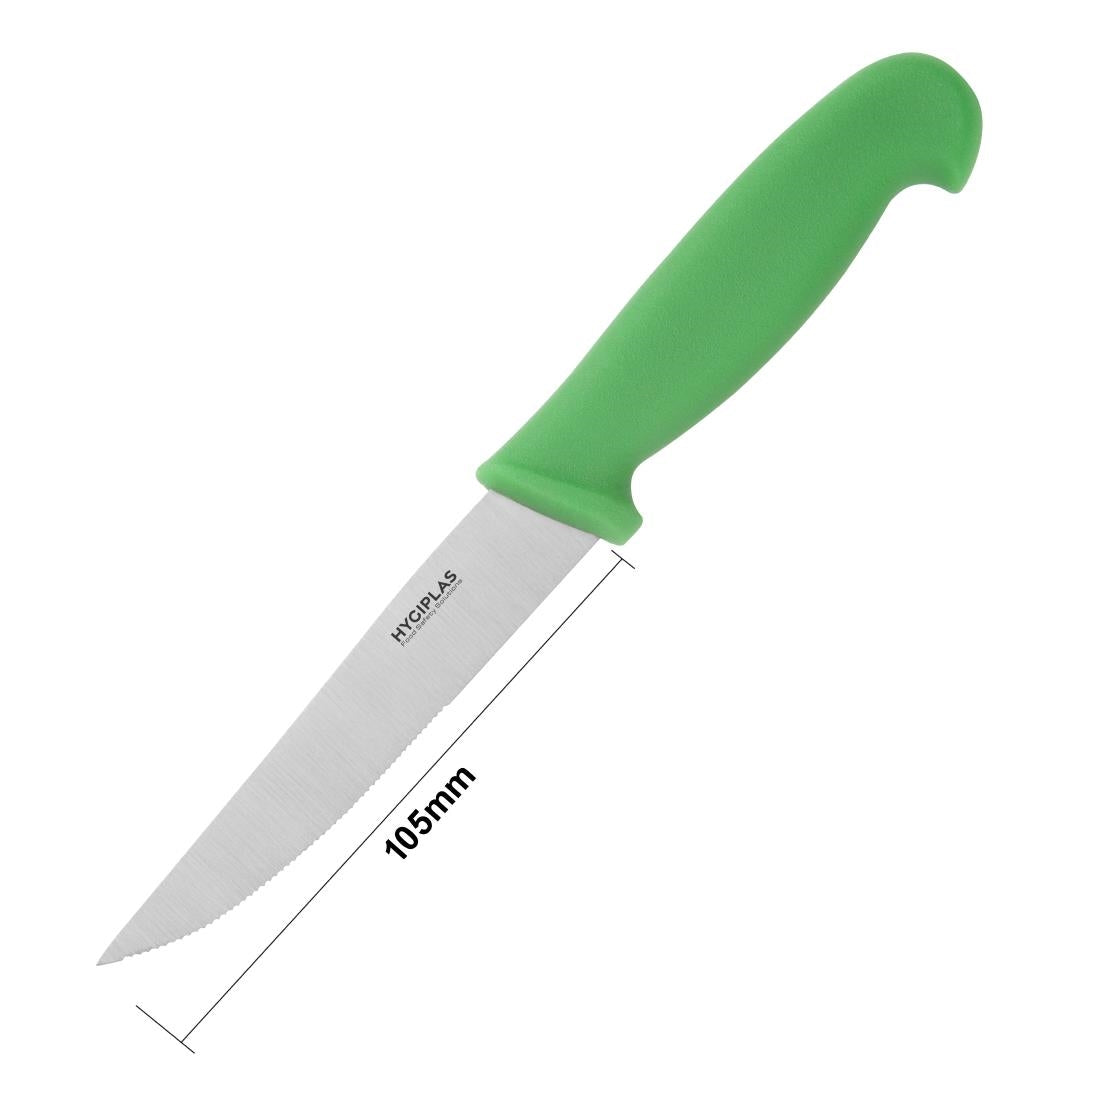 C862 Hygiplas Serrated Vegetable Knife Green 10cm JD Catering Equipment Solutions Ltd